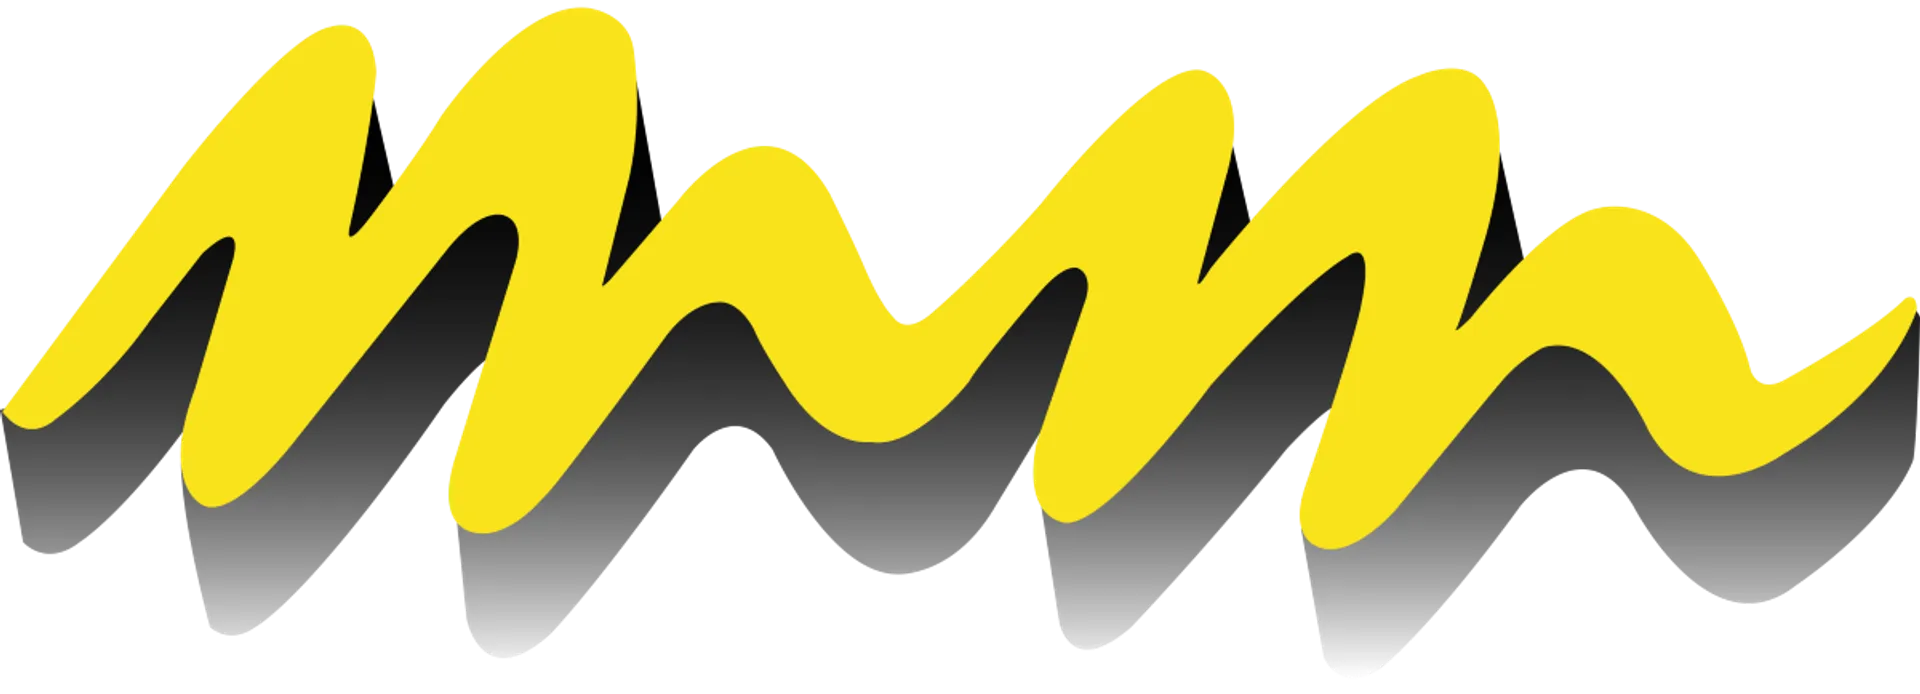 PINTURERIAS MM logo